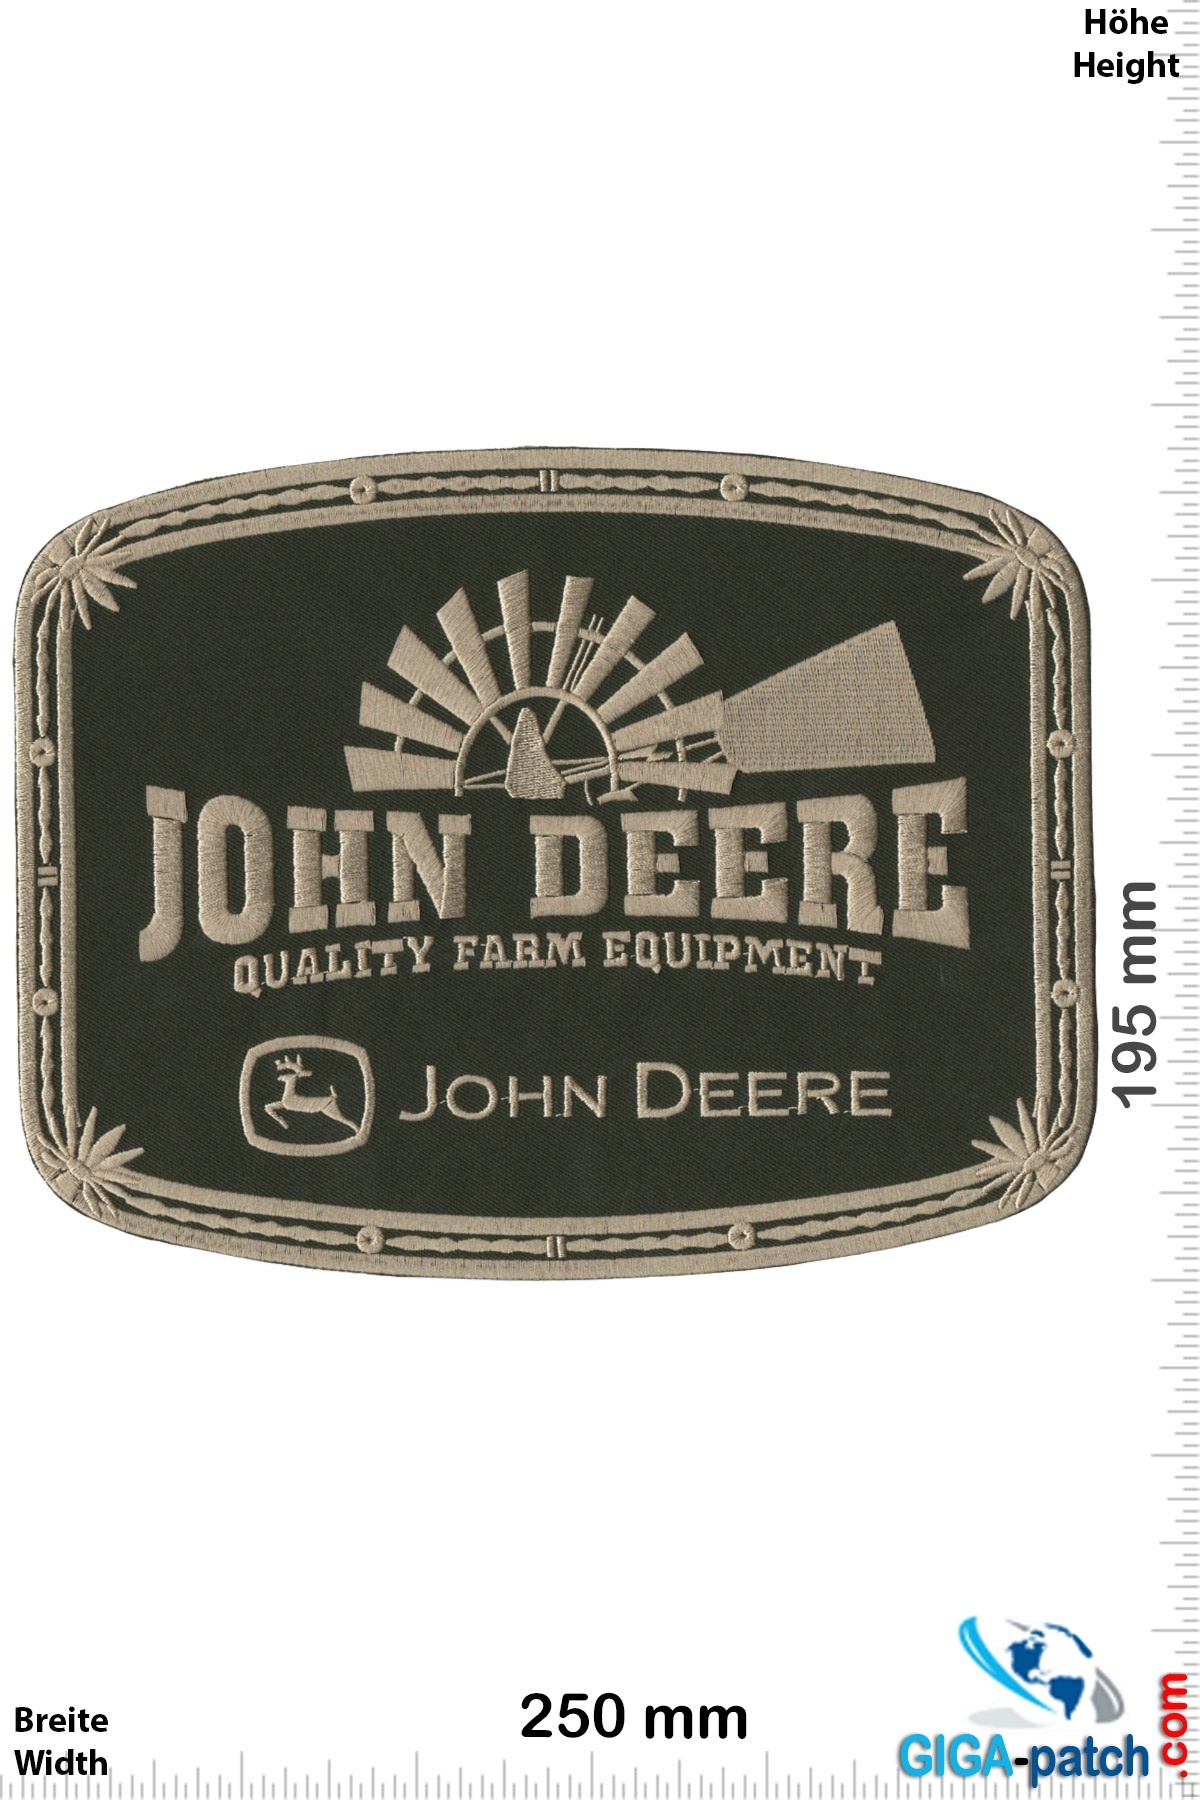 John Deere - Quality Farm Equipment - 25 cm